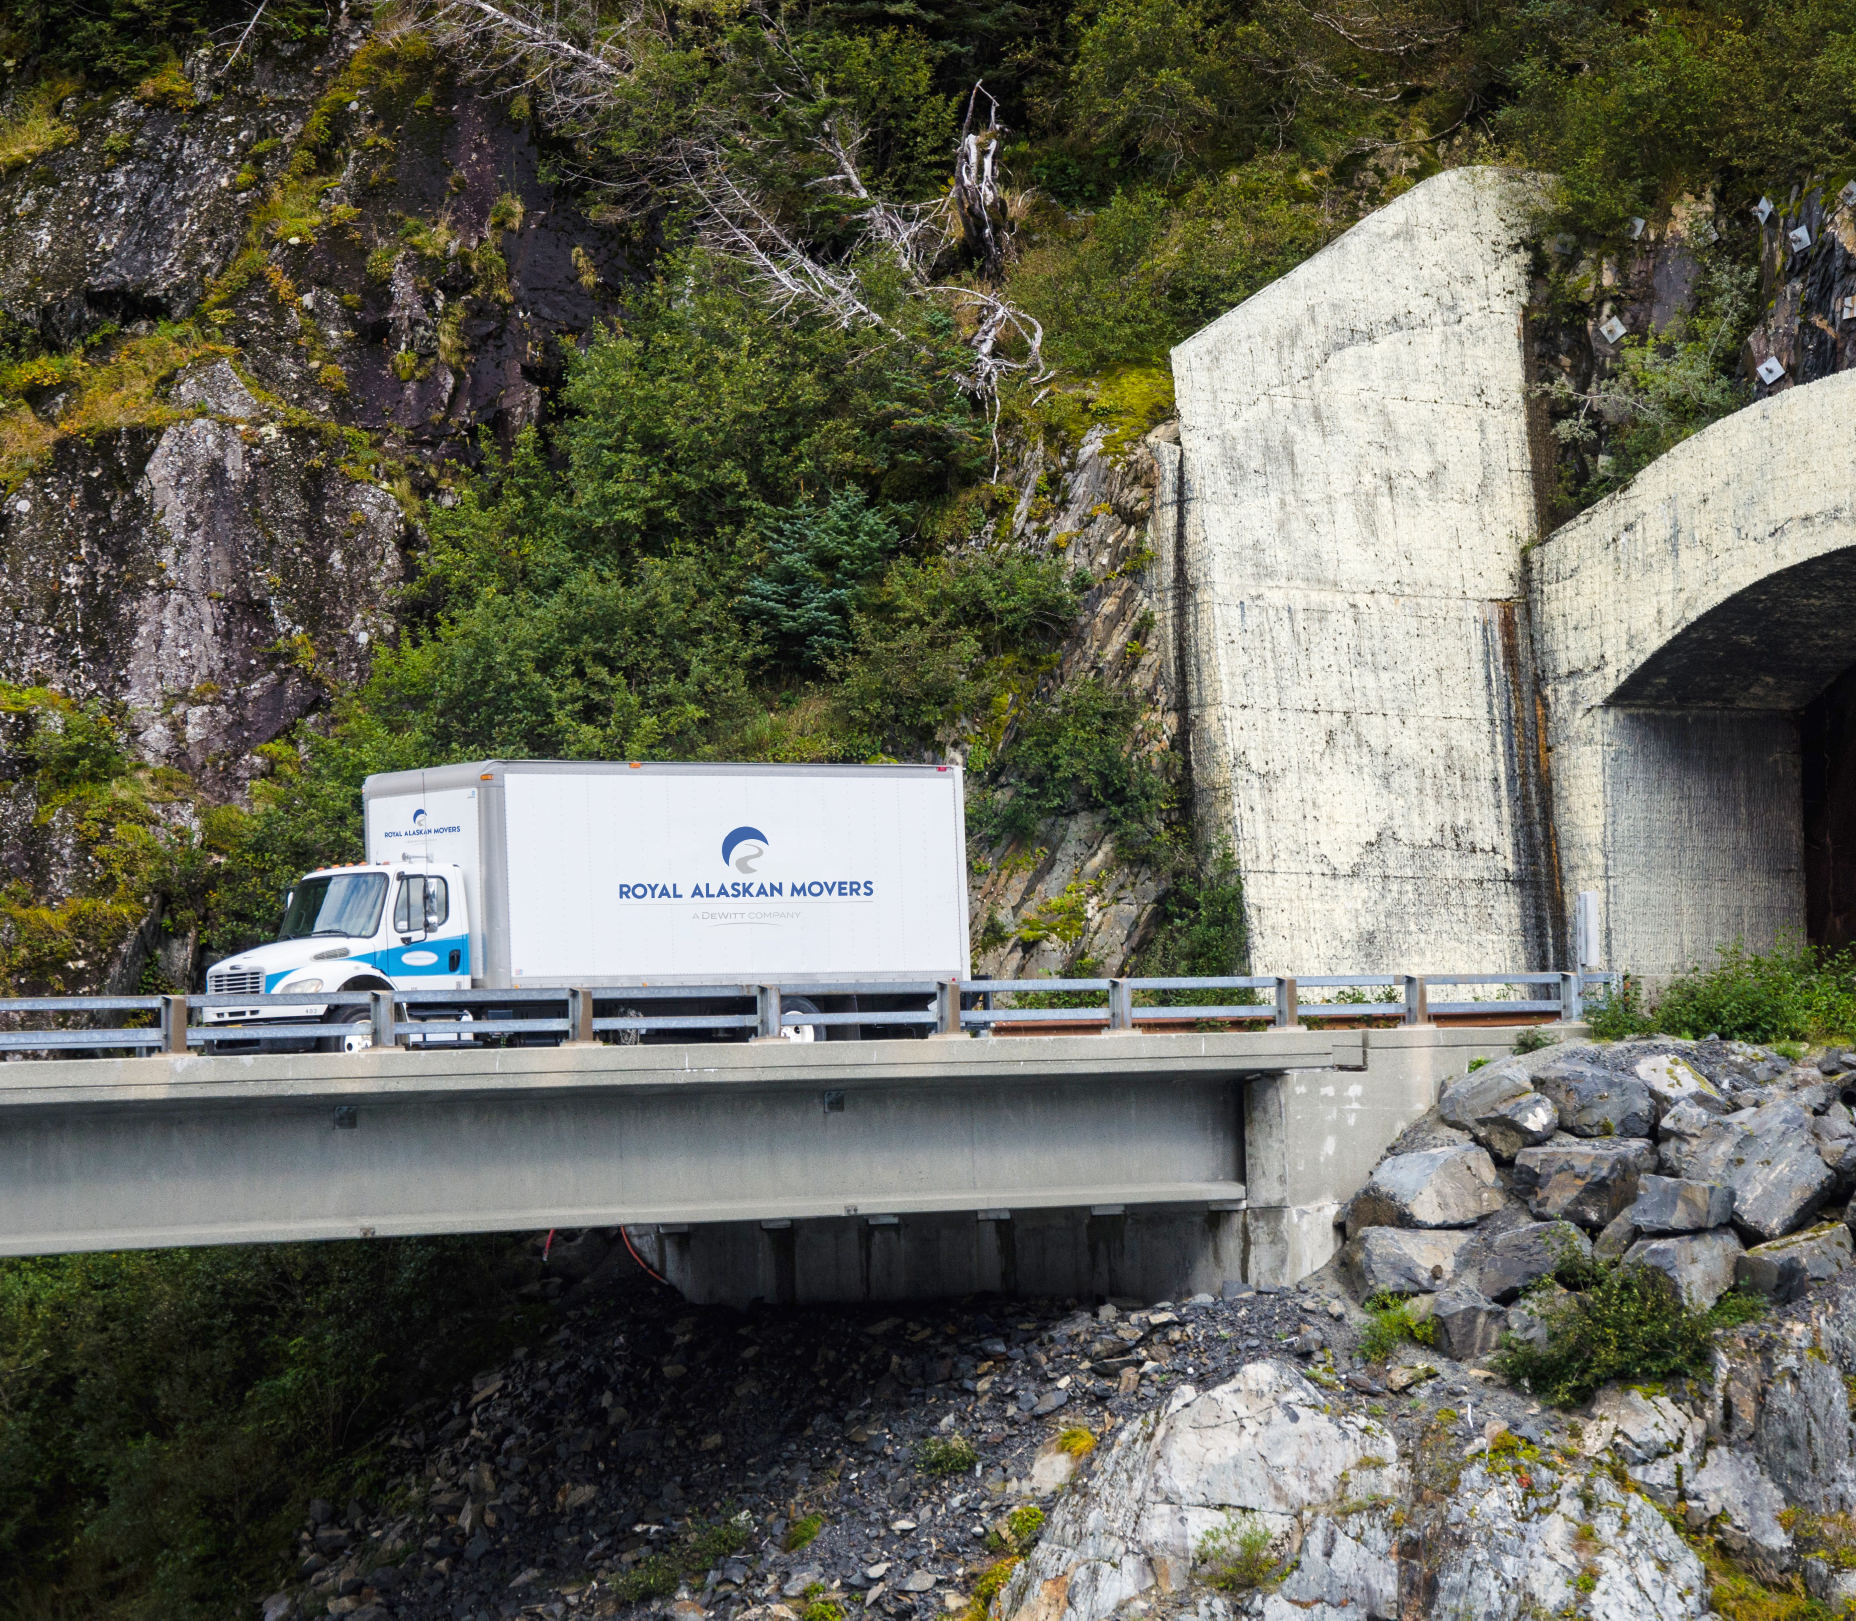 Royal Alaskan Movers Truck driving in Alaska